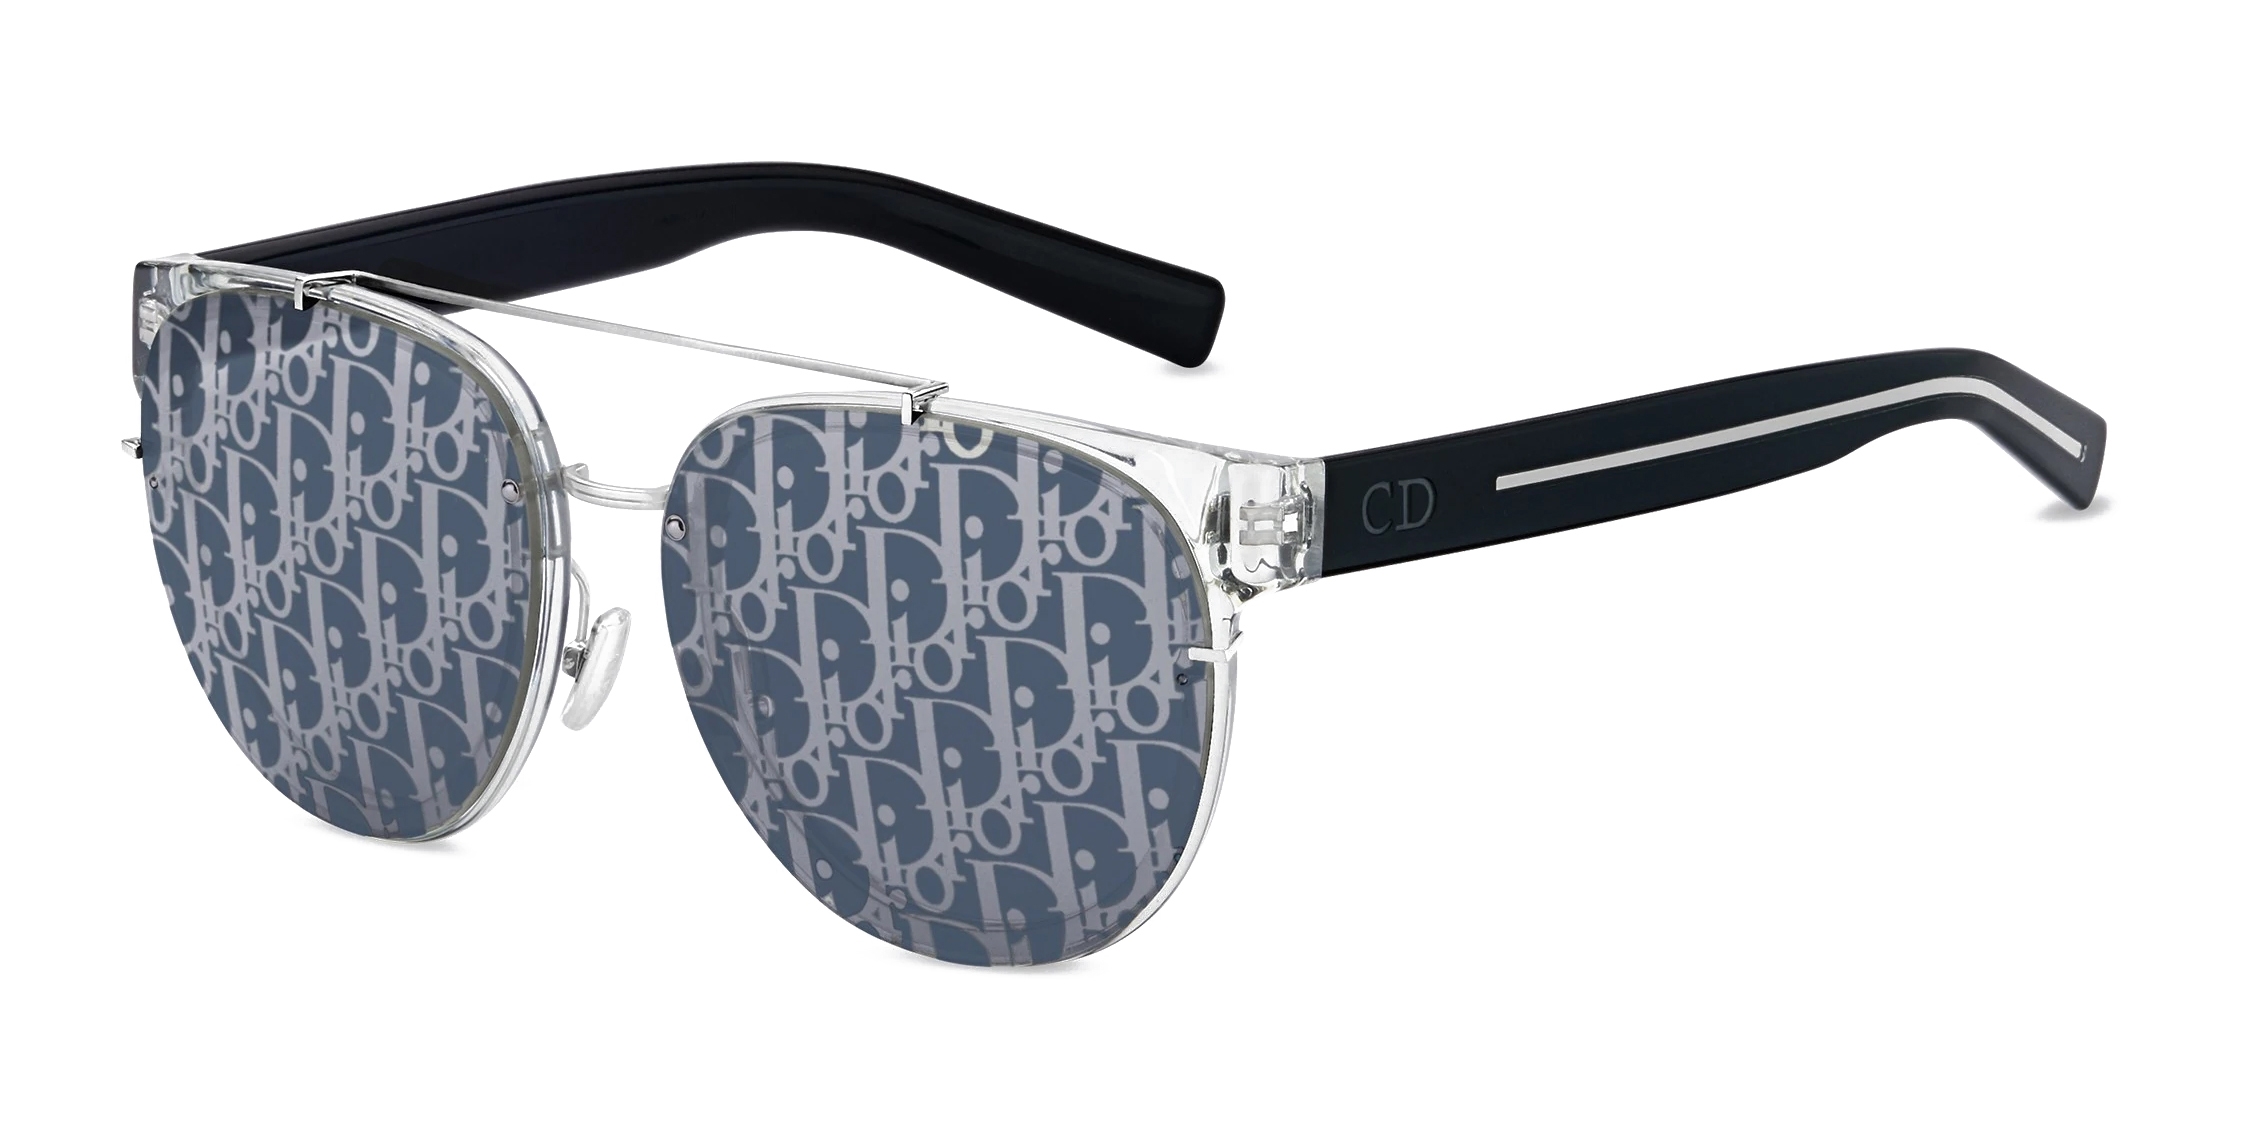 Dior - Sunglasses - BlackTie143S 